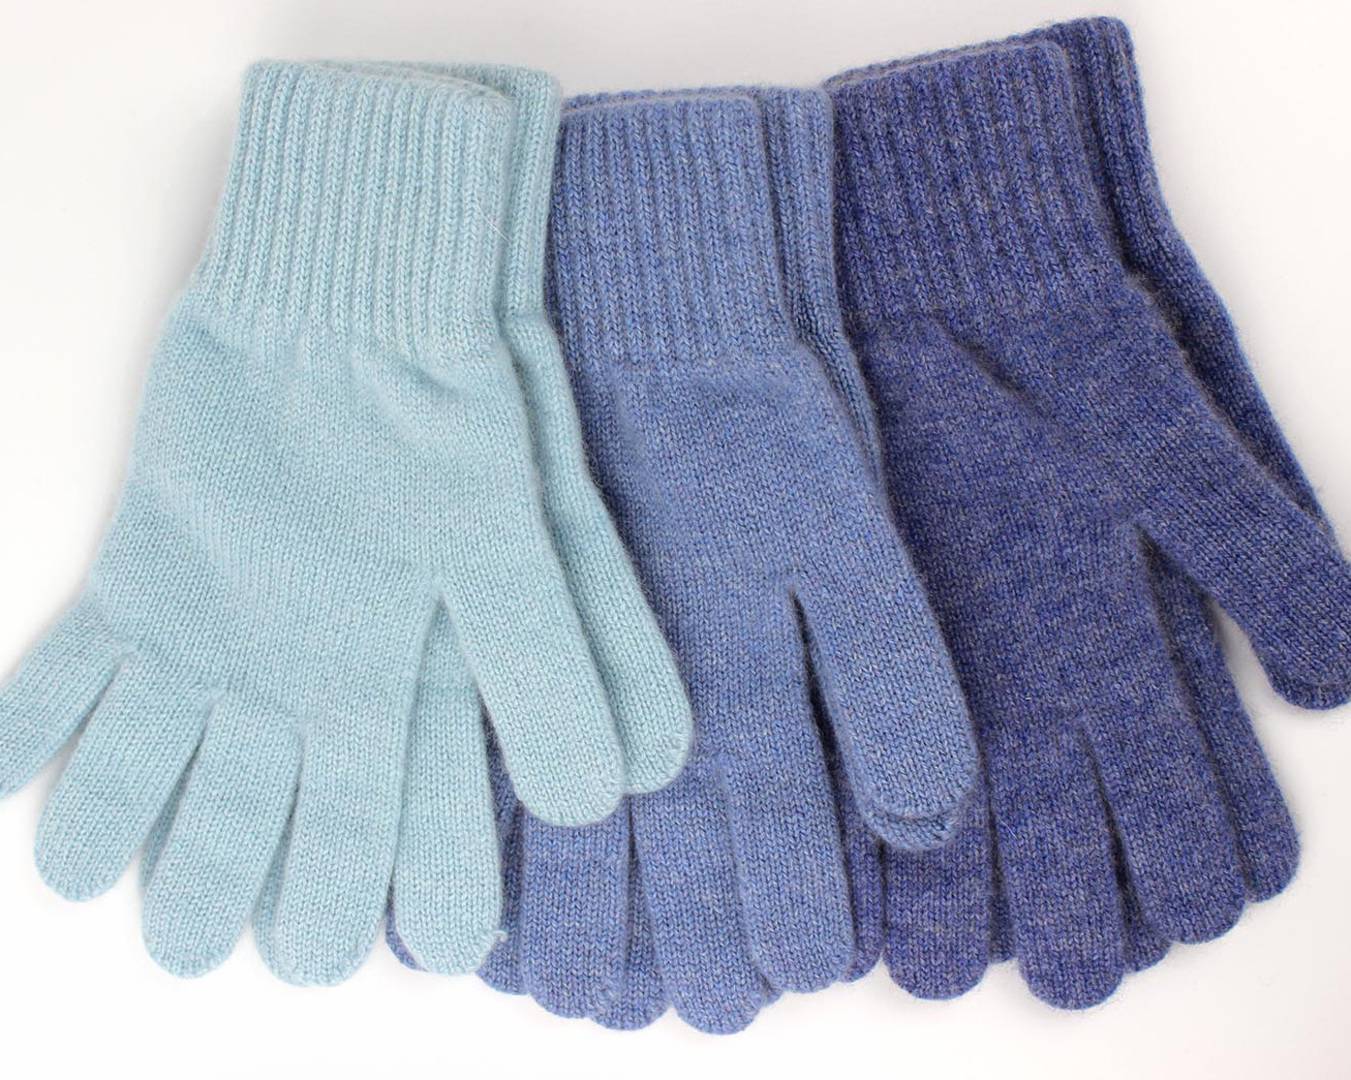 Cashmere gloves in a range of colours, Scottish Textiles Showcase